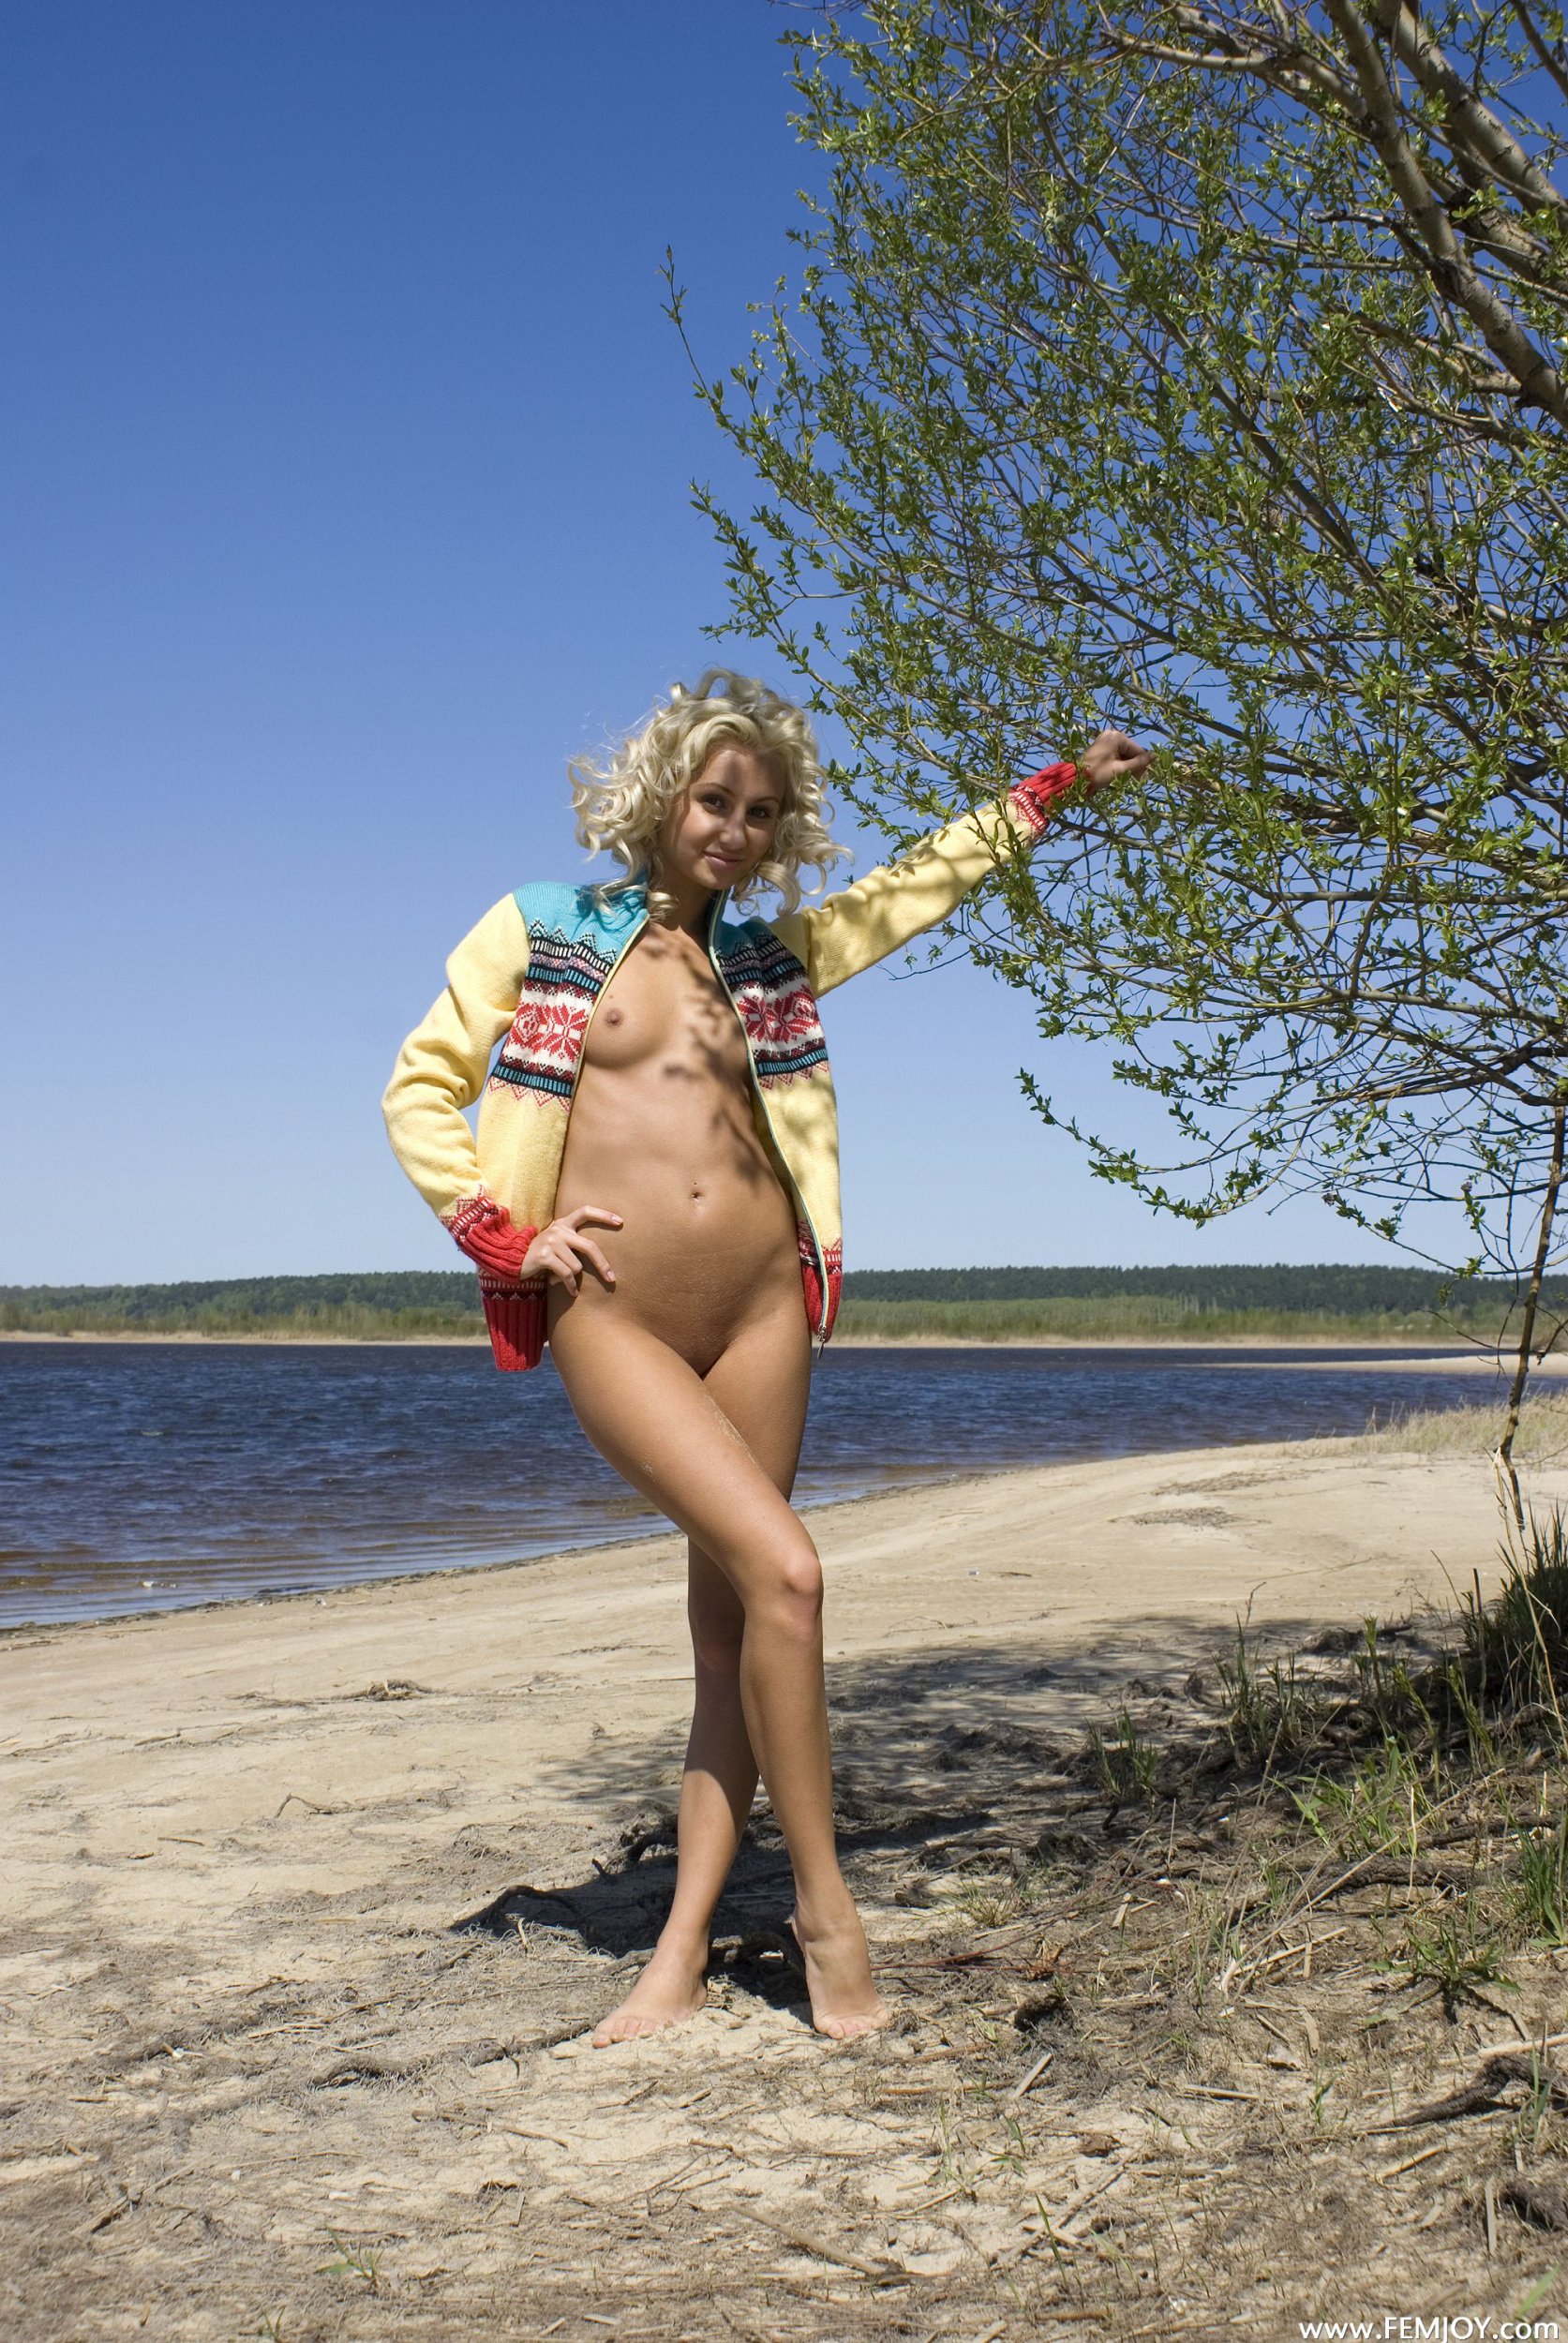 https://erotic.pics/blonde-teen-cutie-anju-naked-on-the-shoreline-10-pics/